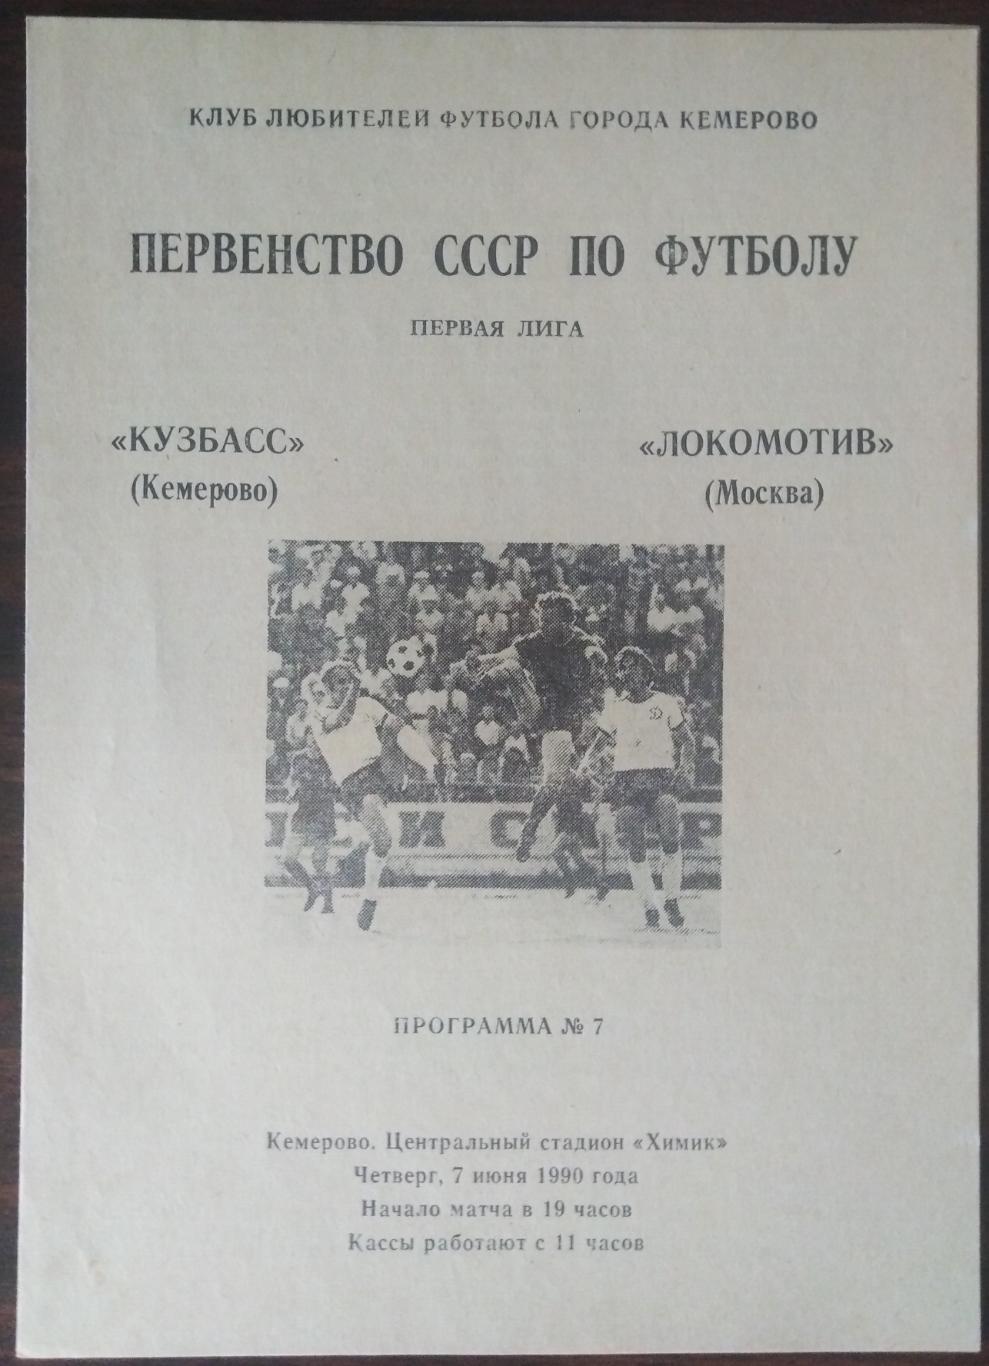 Кузбасс Кемерово - Локомотив Москва - 07.06.1990